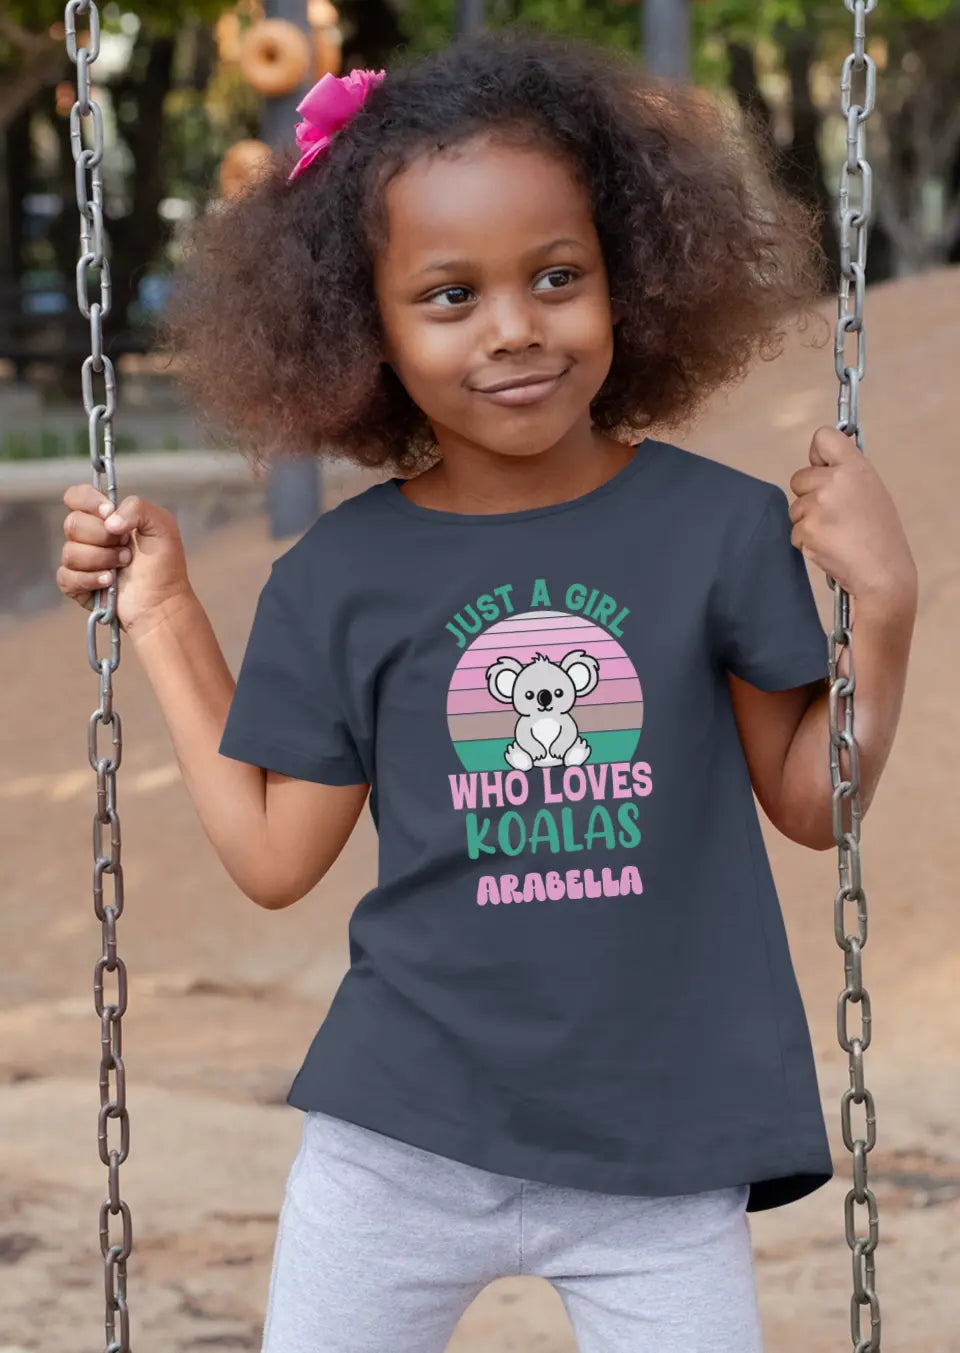 Eco-friendly Kinder T-Shirt aus Baumwolle, Just a Girl who loves Koalas, S-XL